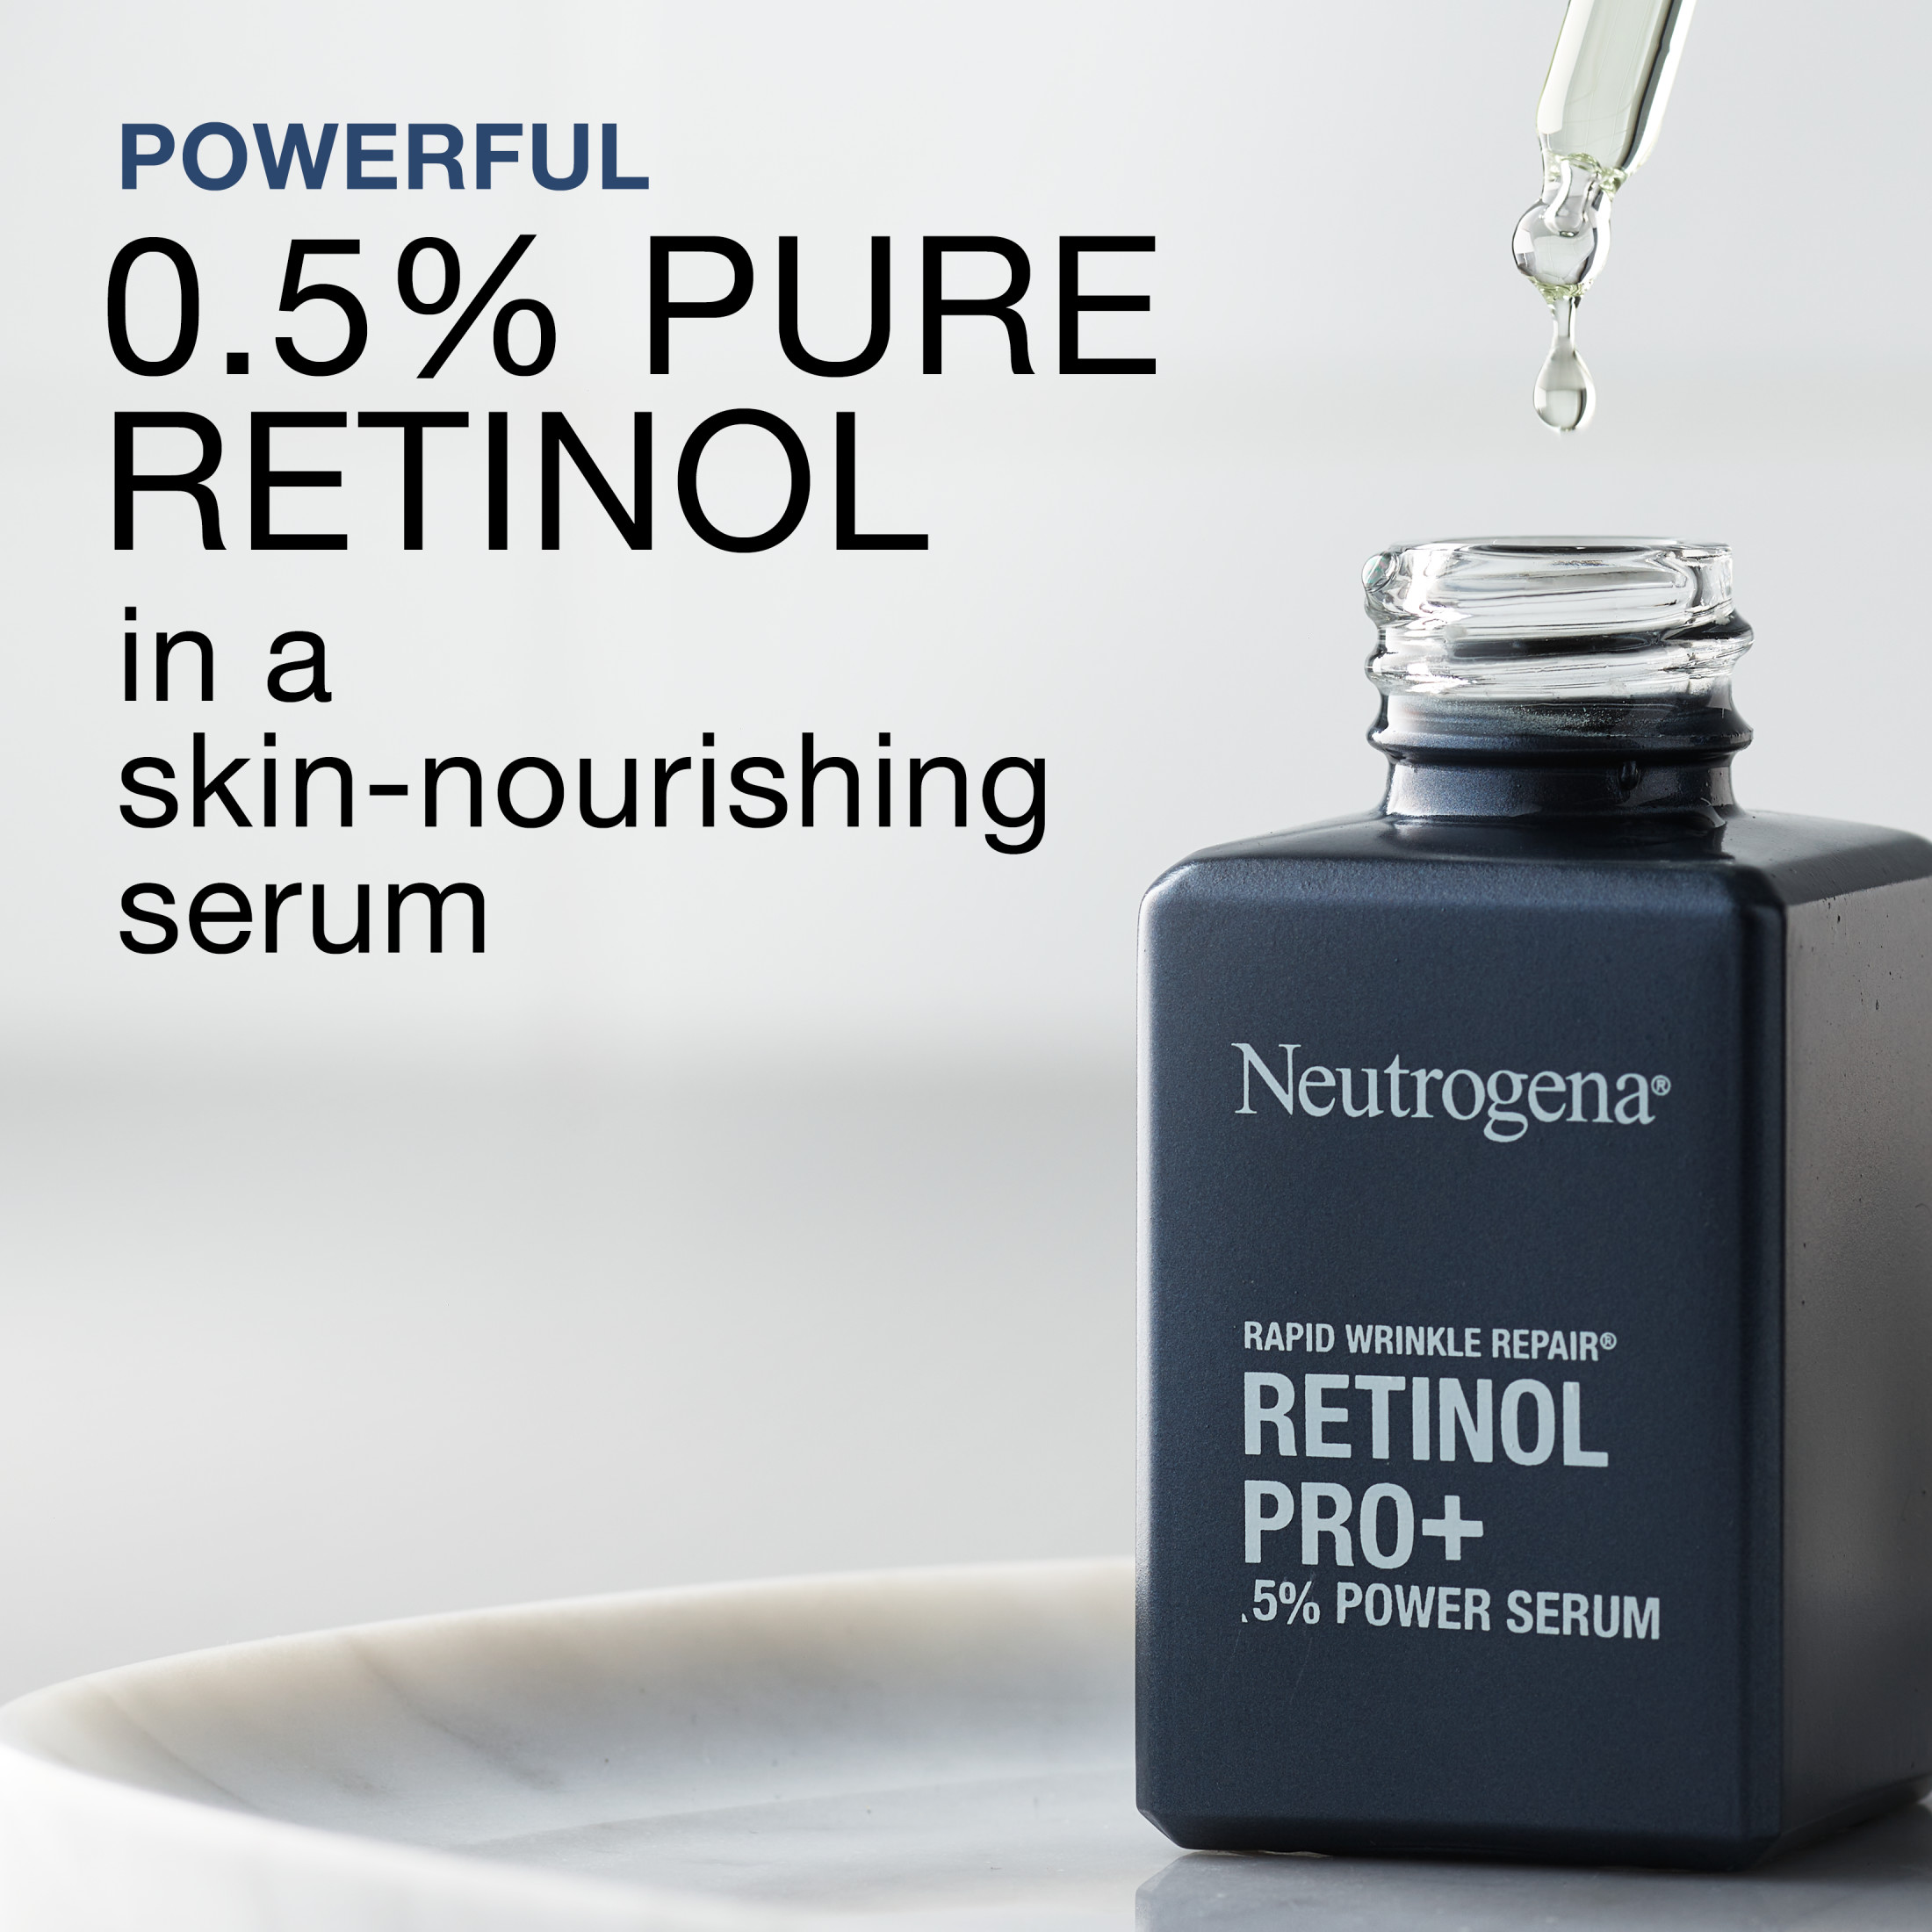 Neutrogena Rapid Wrinkle Repair Retinol Pro+.5% Power Serum, 1 fl. oz - image 4 of 8